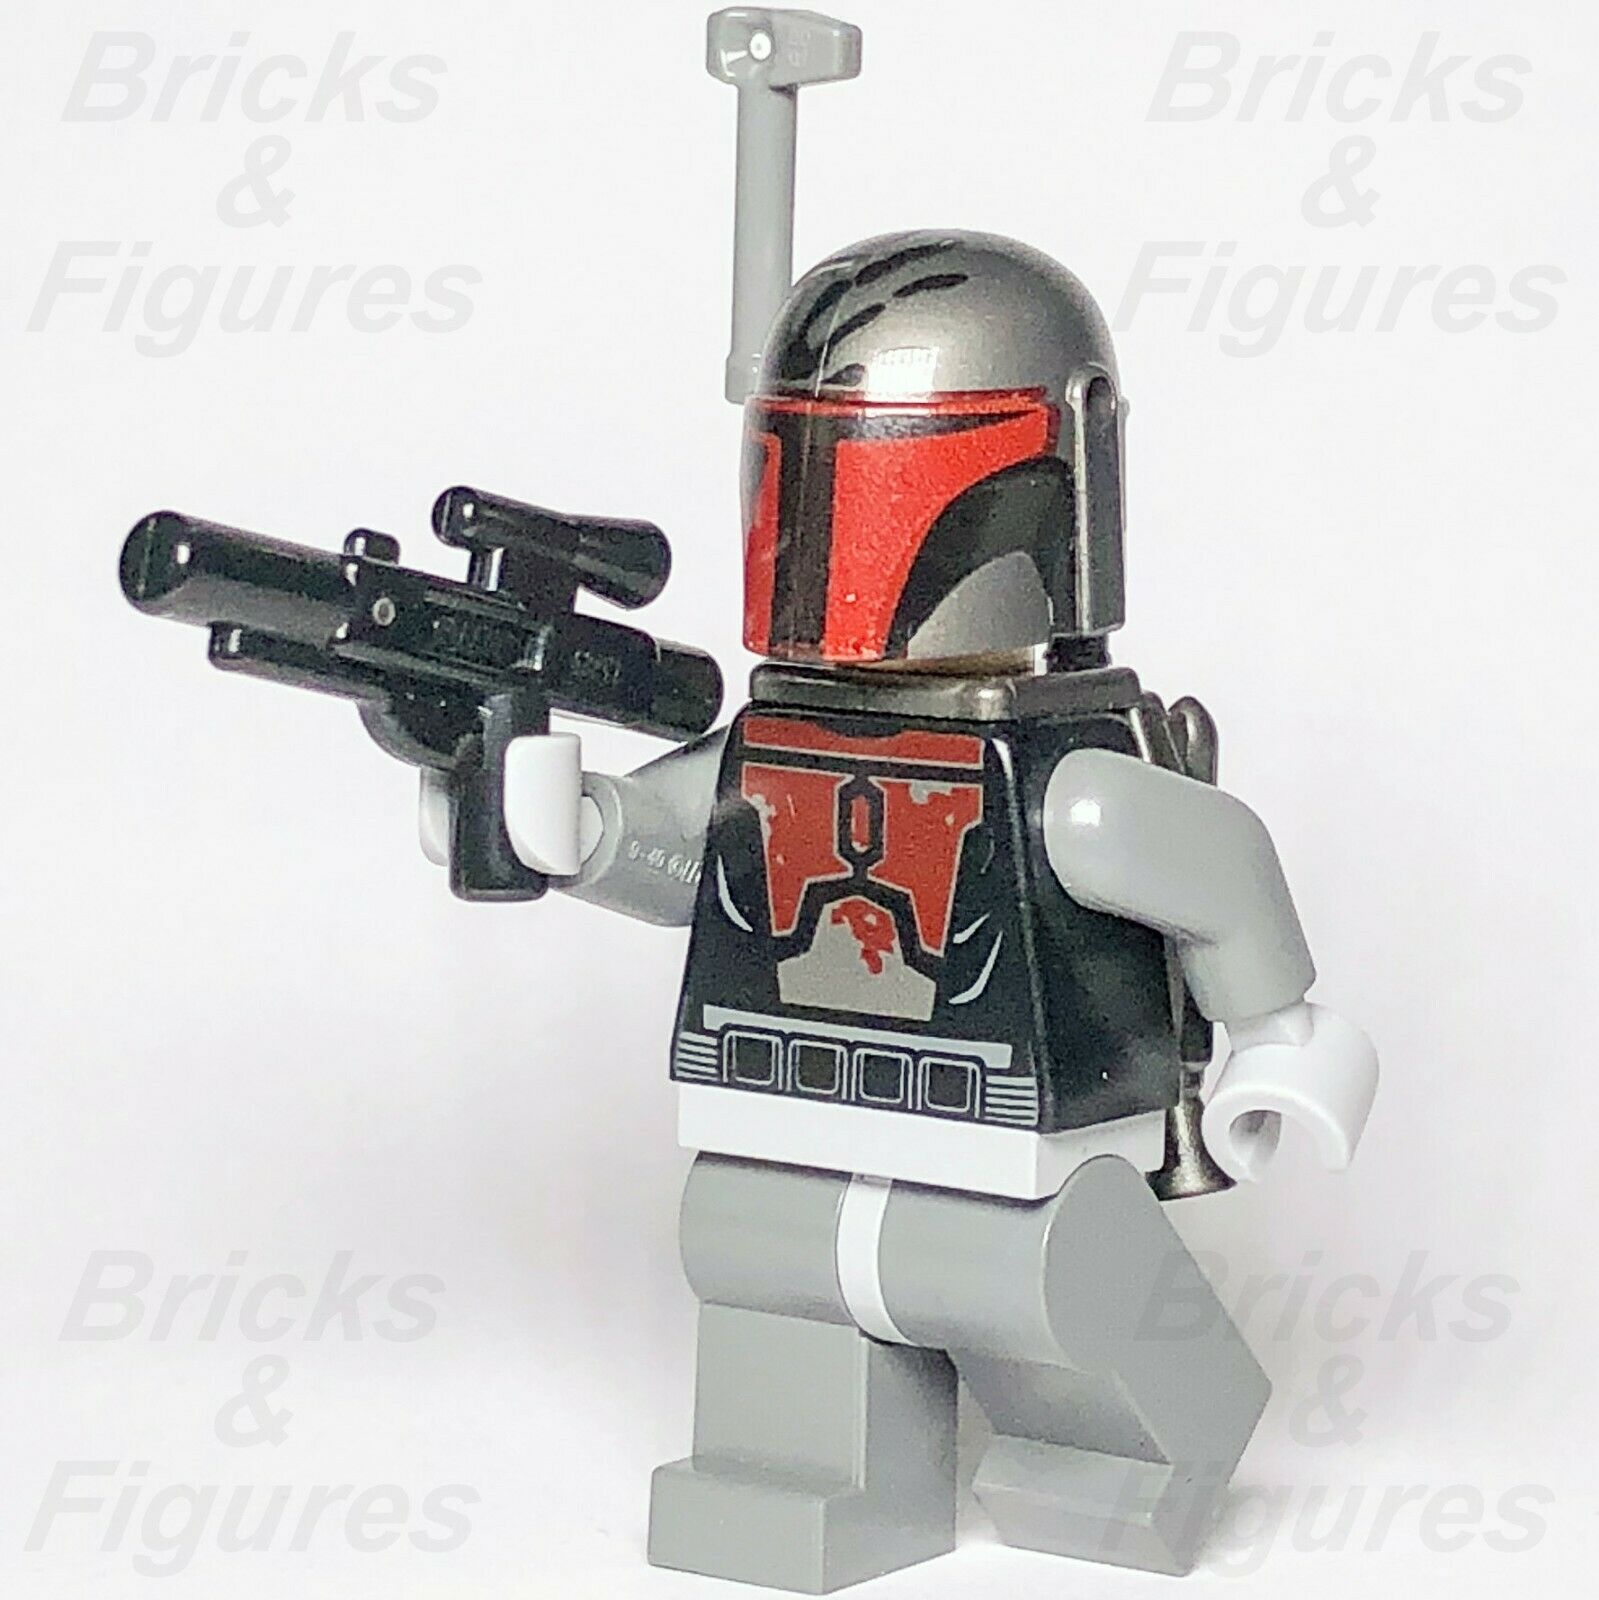 New Star Wars LEGO Mandalorian Super Commando Clone Wars Minifig 75022 Genuine - Bricks & Figures